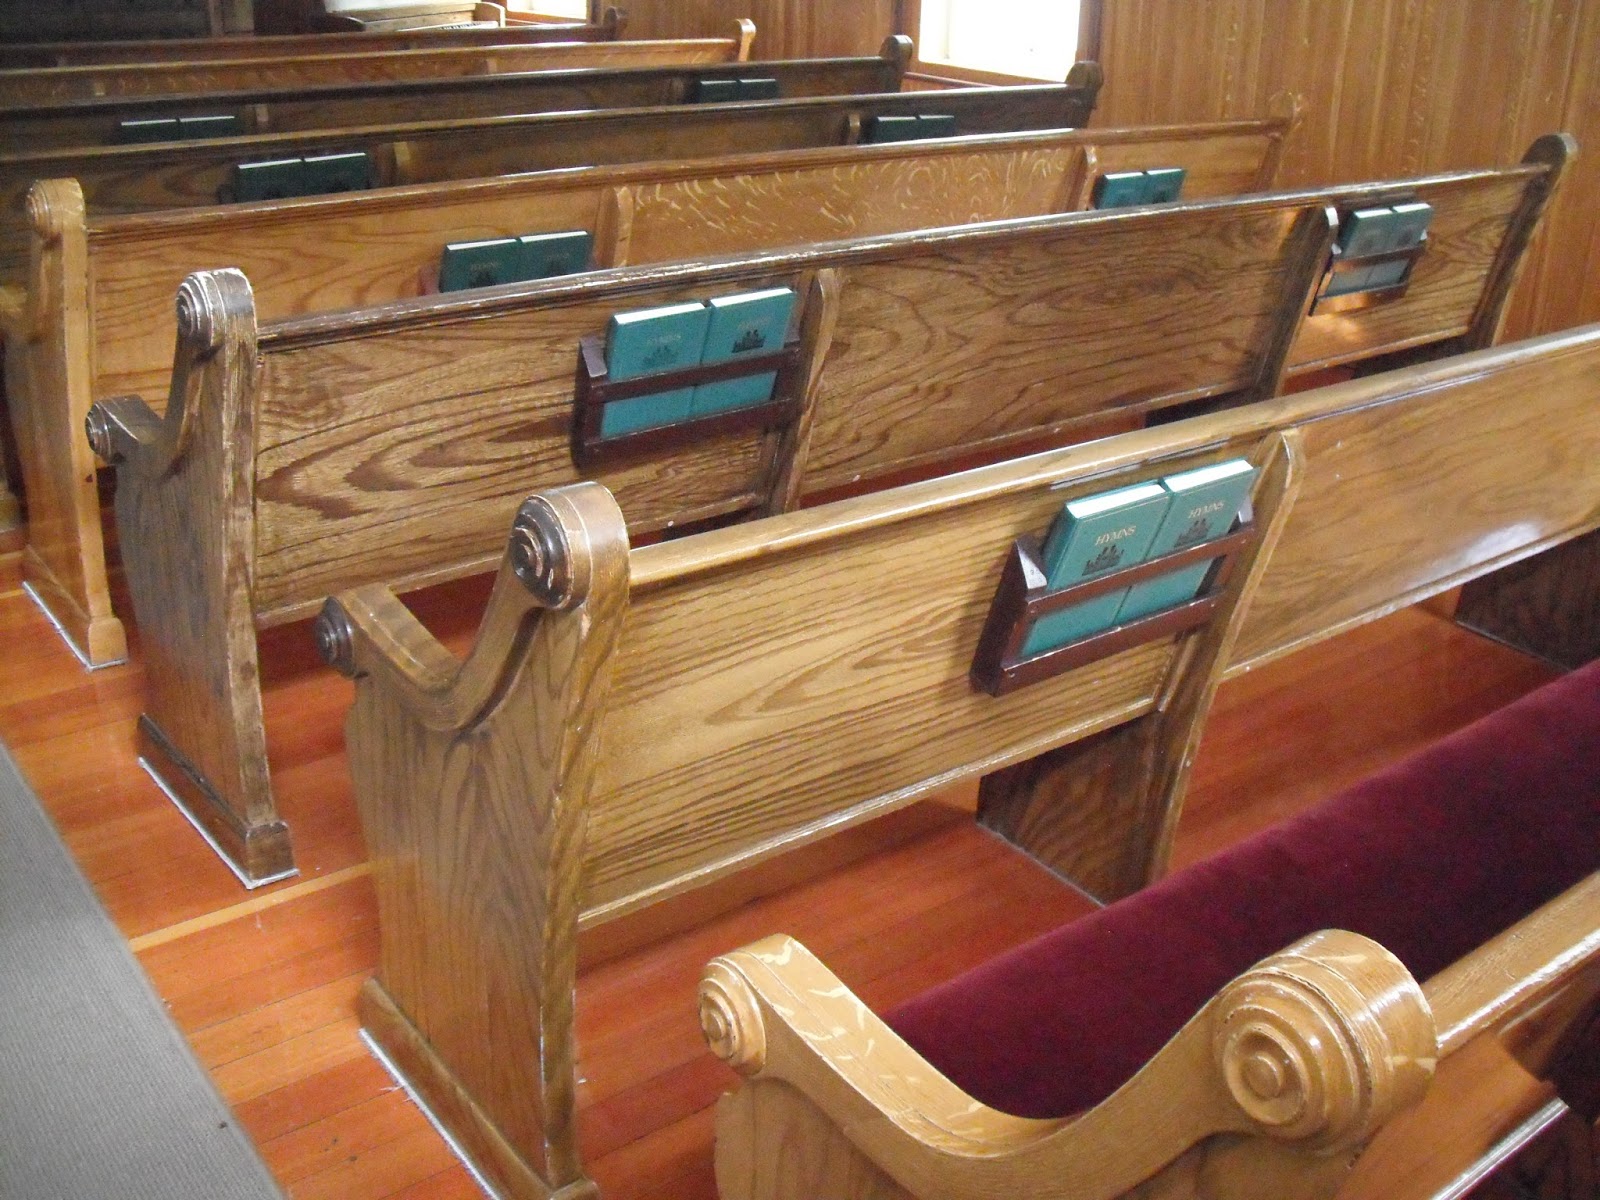 Historic LDS Architecture: Pine Valley Branch: Chapel Interior